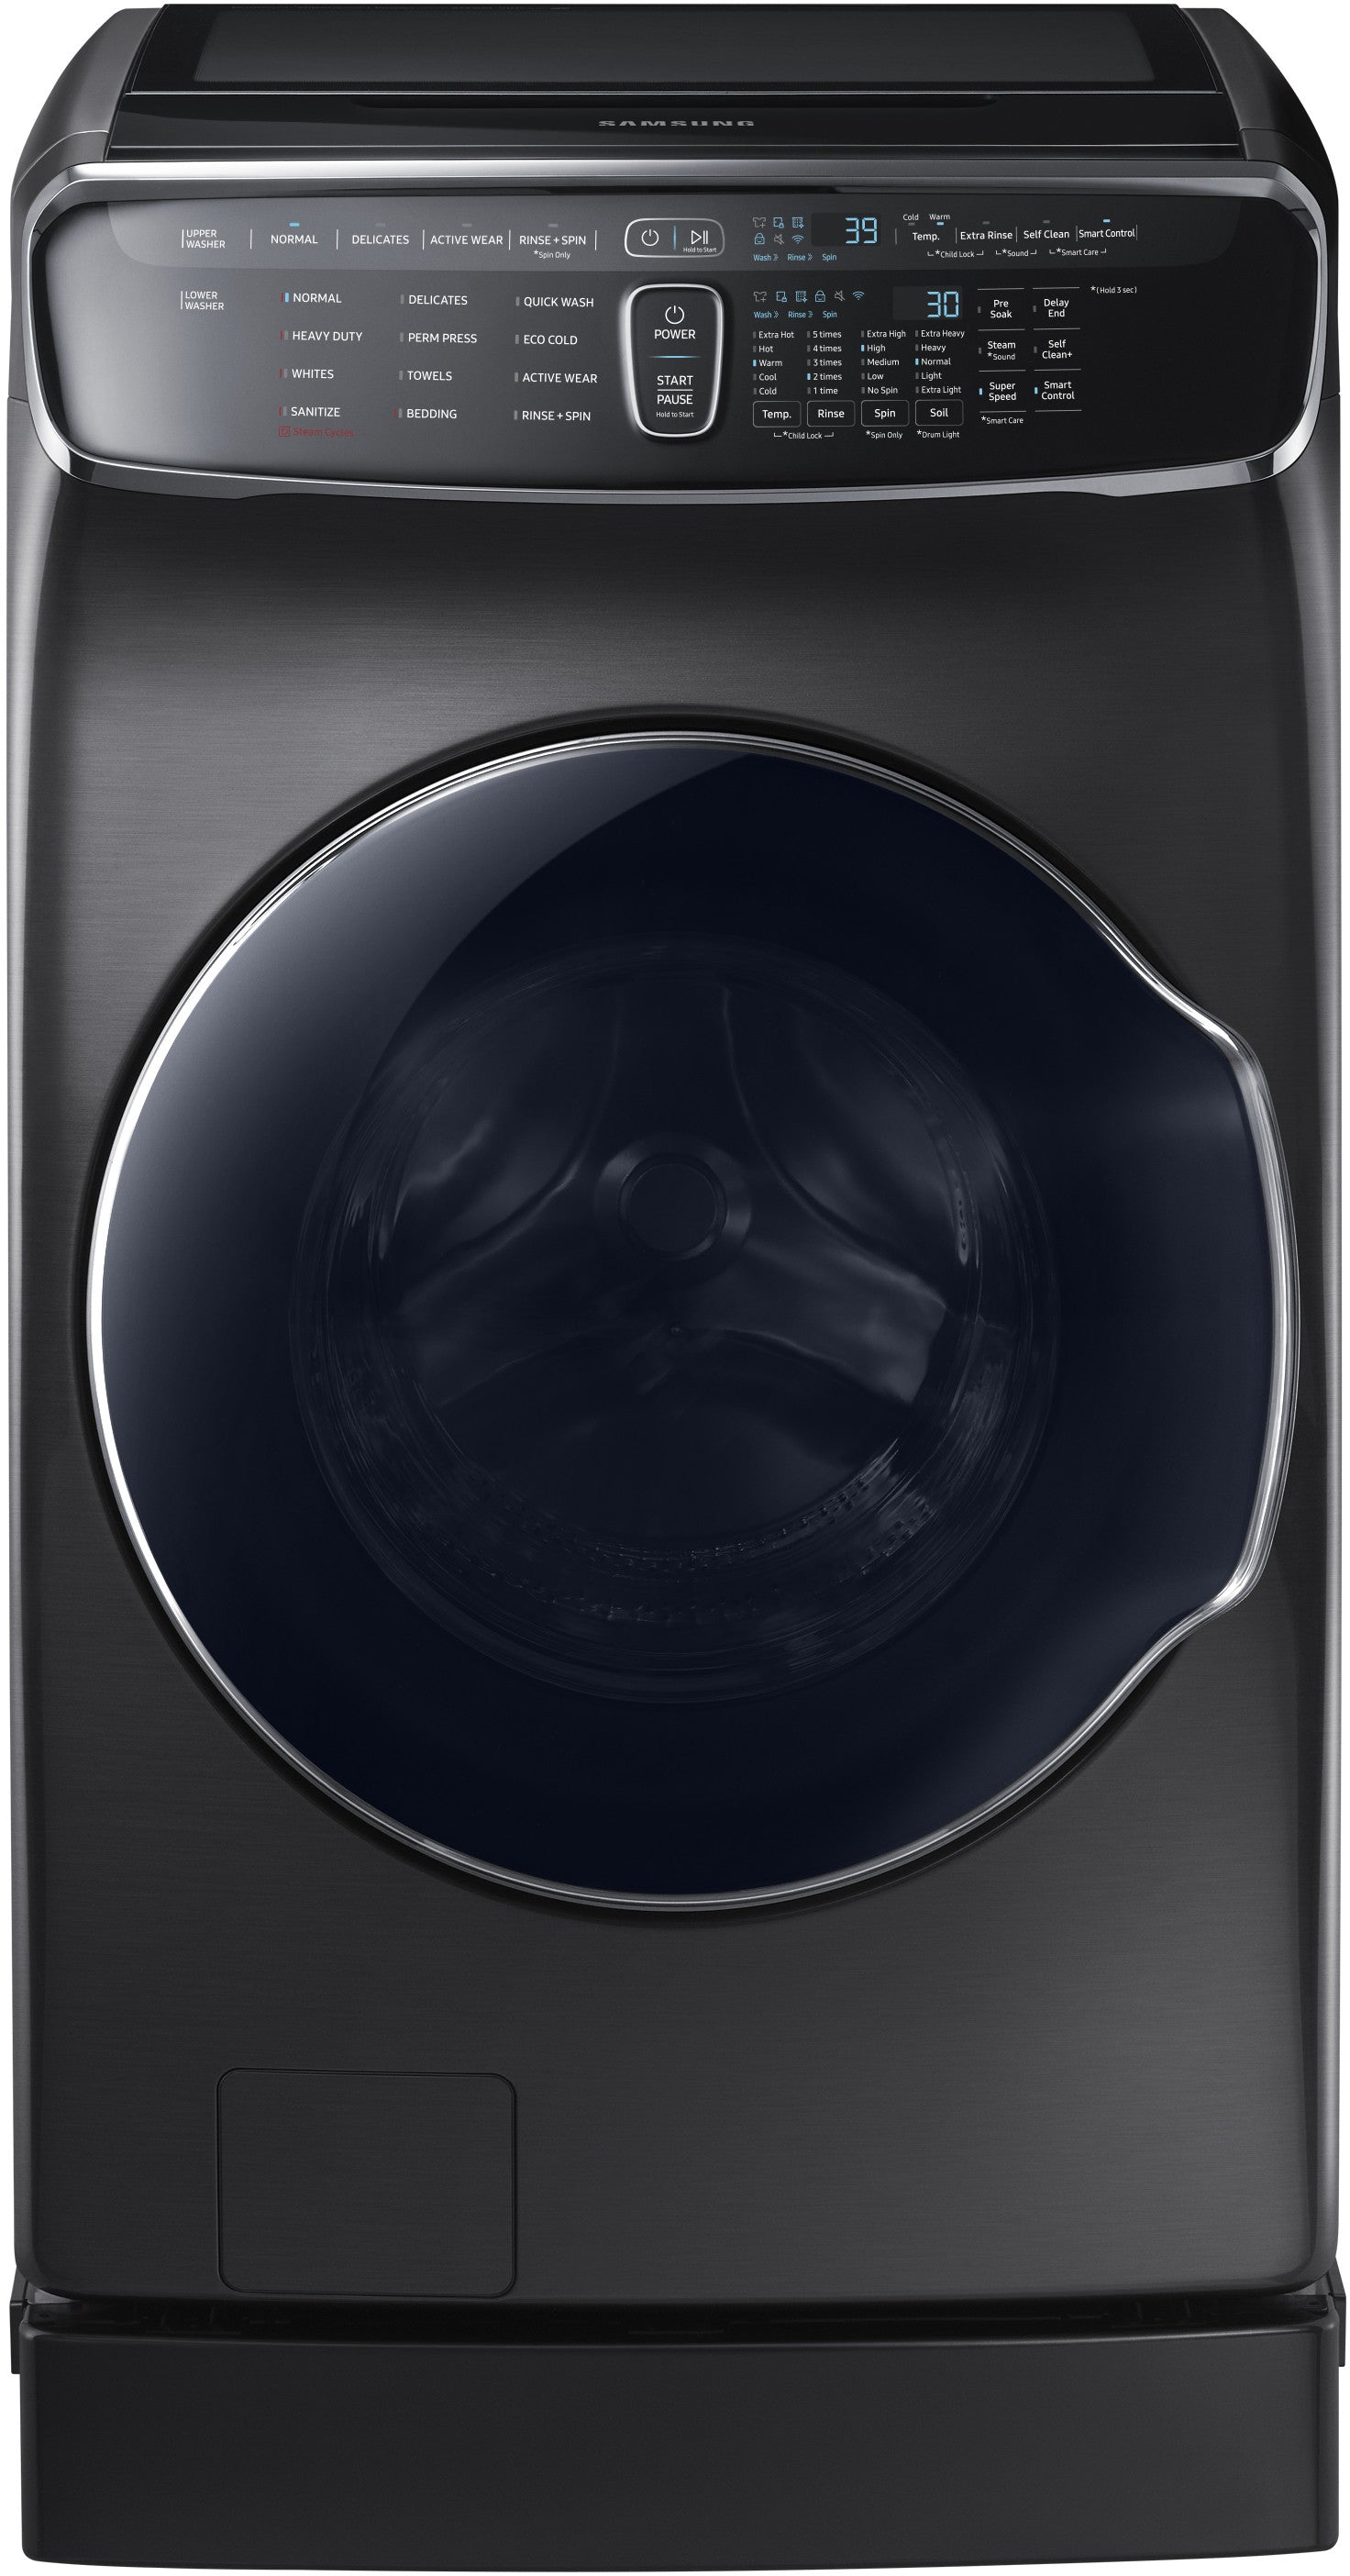 Samsung WV60M9900AV/A5 6.0 Cu. Ft. High-efficiency Flex wash Washer - Samsung Parts USA